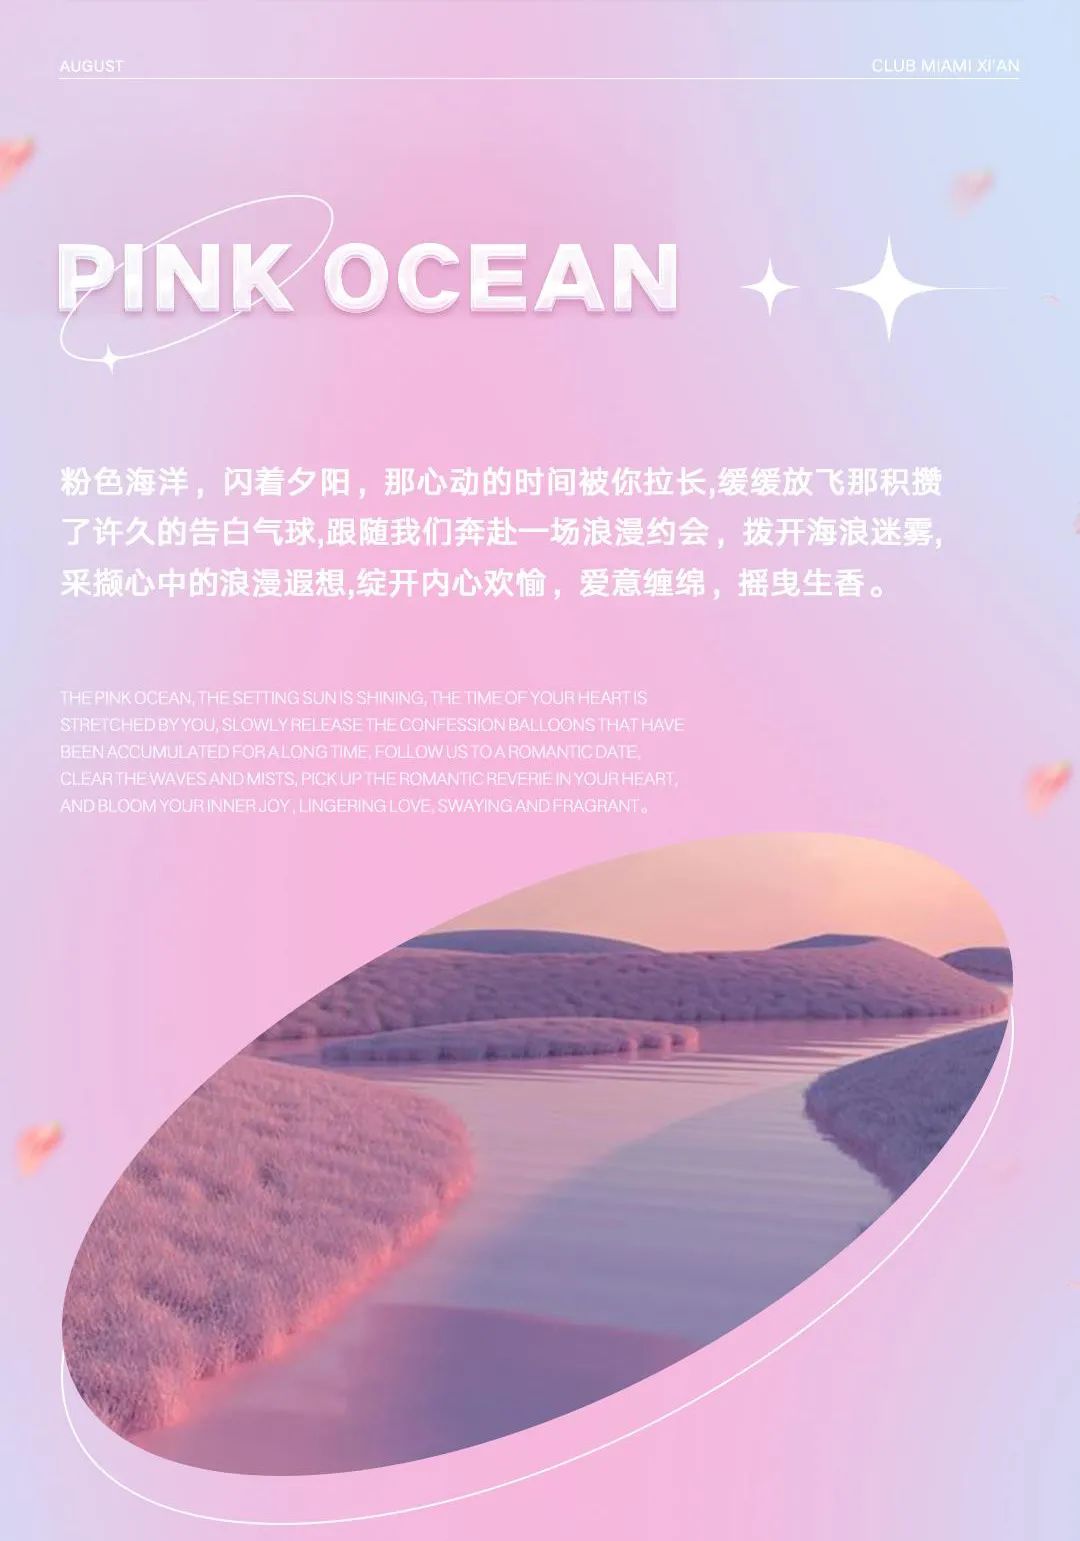 CLUB MIAMI XI'AN丨08.04-06 粉色海洋，爱的模样，七夕对你的非“粉”之想-西安迈阿密酒吧/MIAMI CLUB